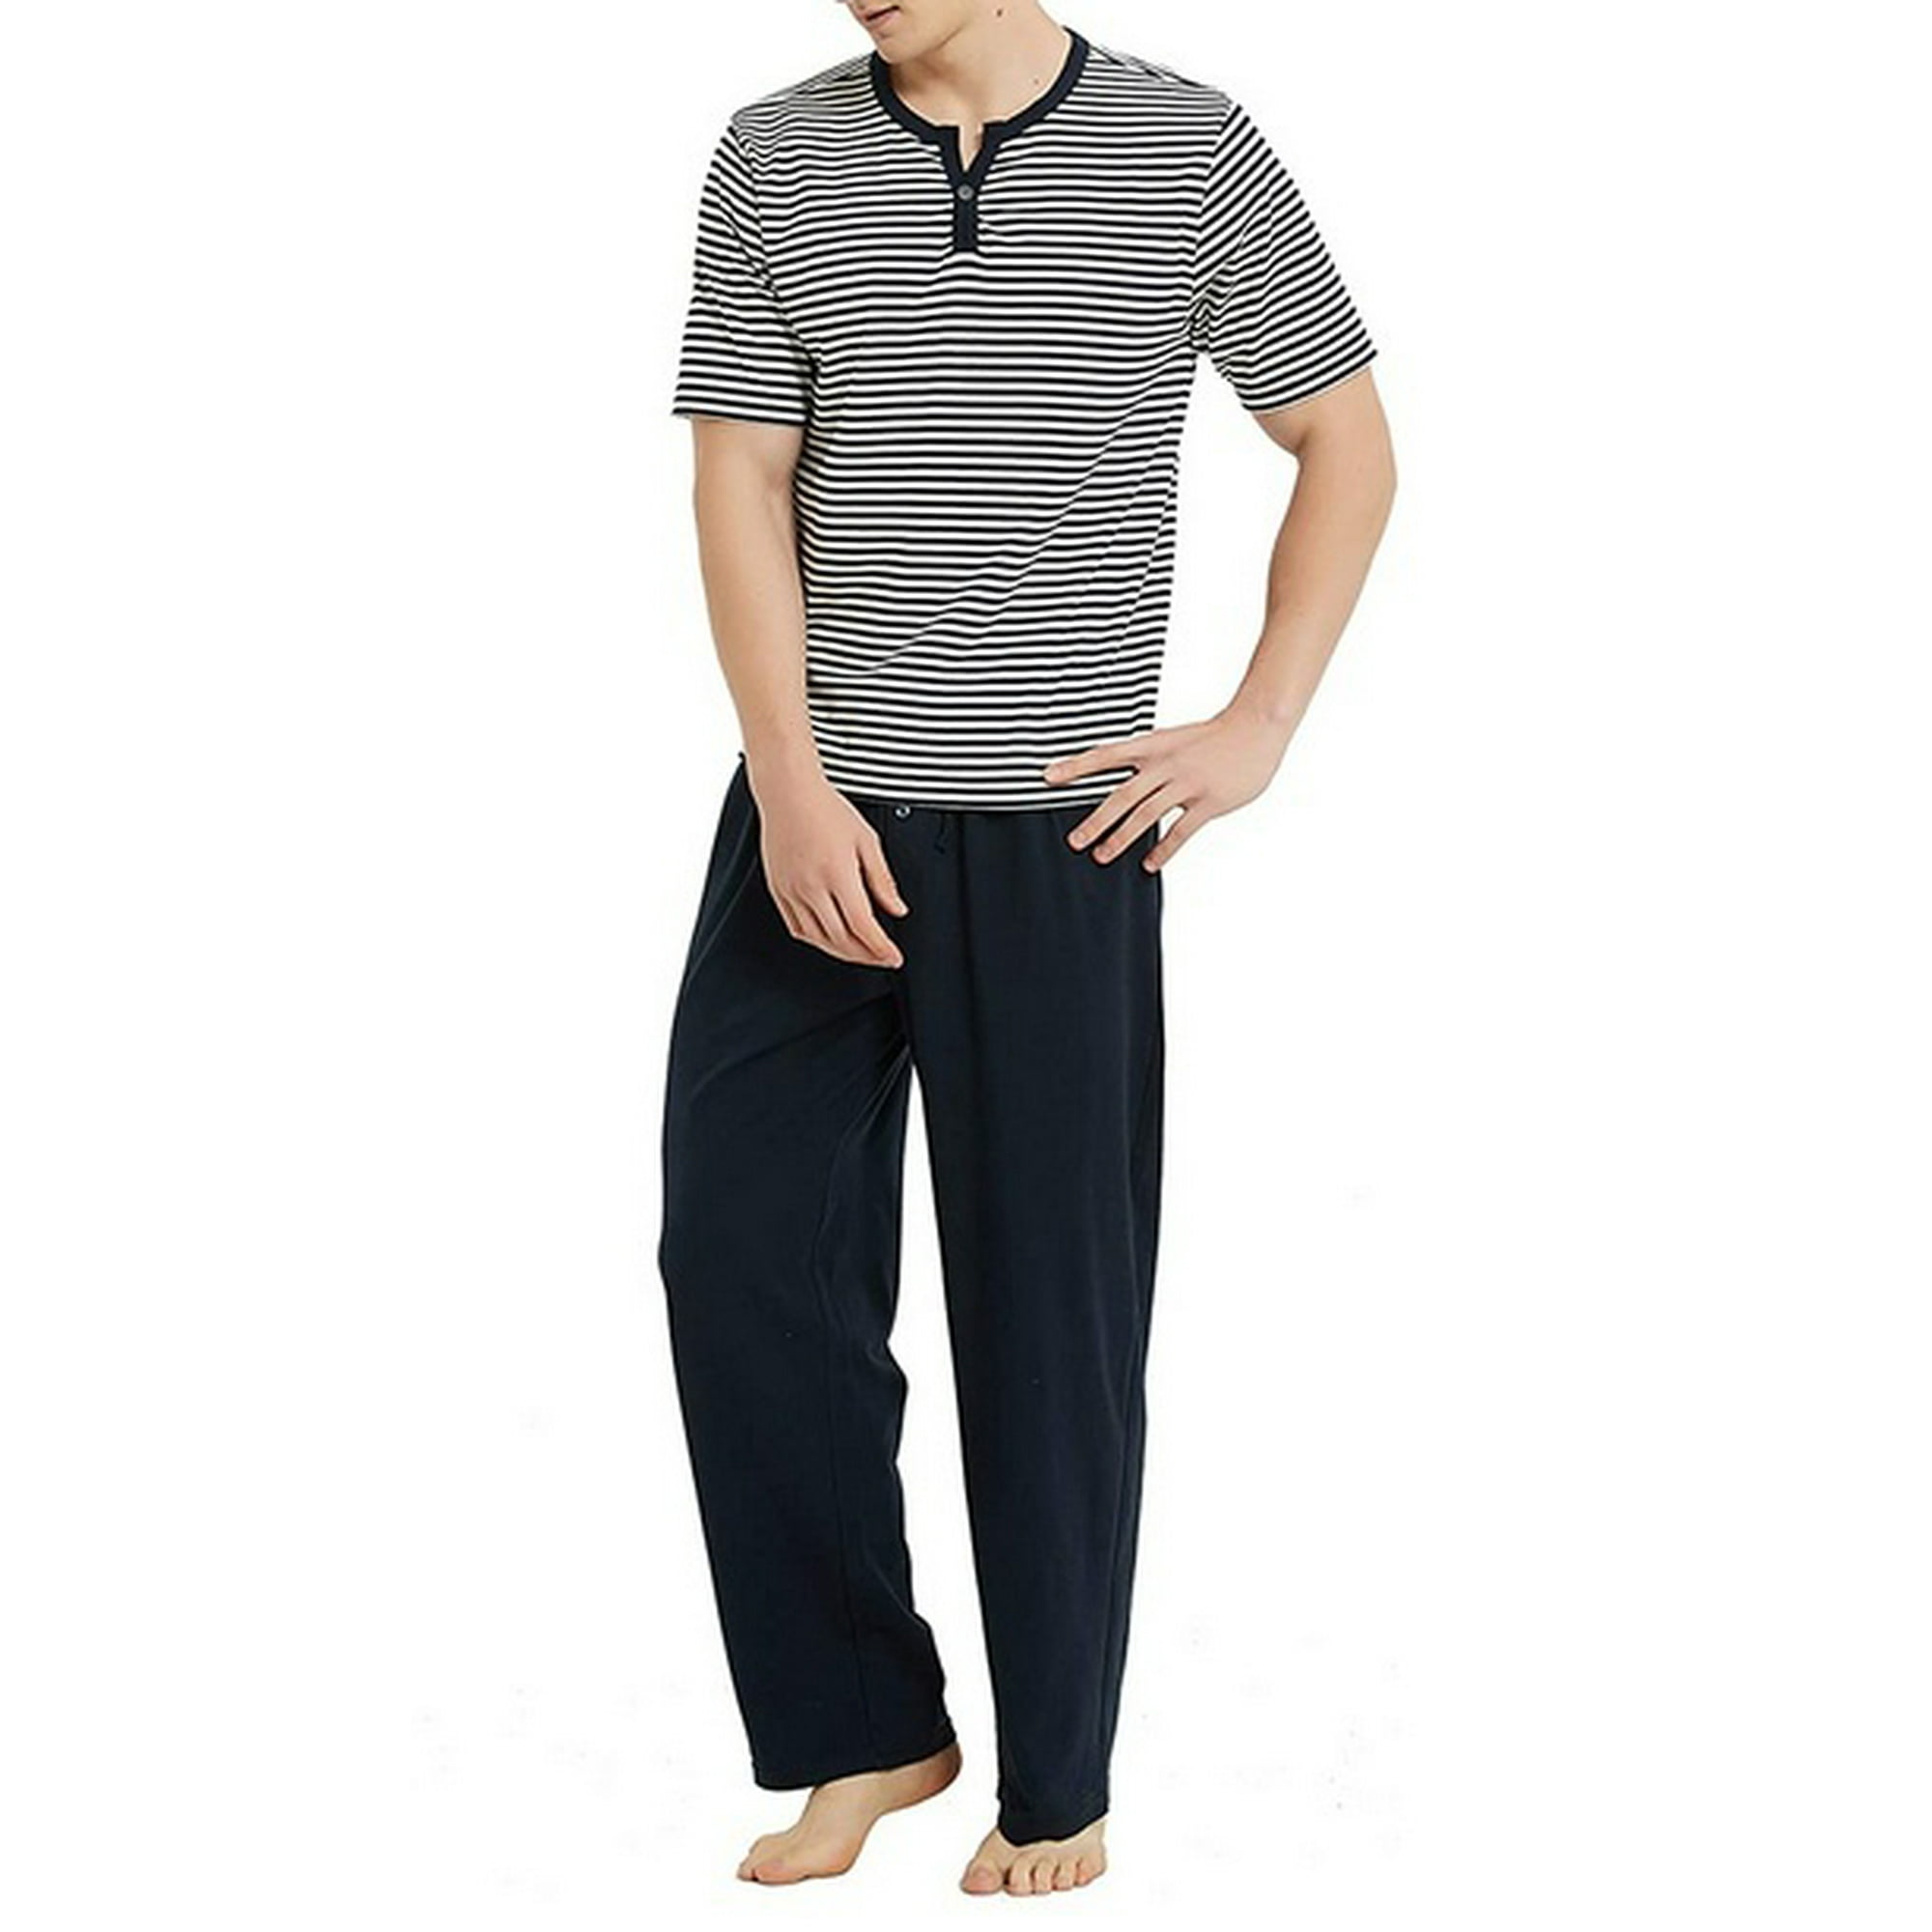 Ekouaer Mens Pajamas Set Short Sleeve Shirt and Long Pajamas Pants Pjs Sleepwear 